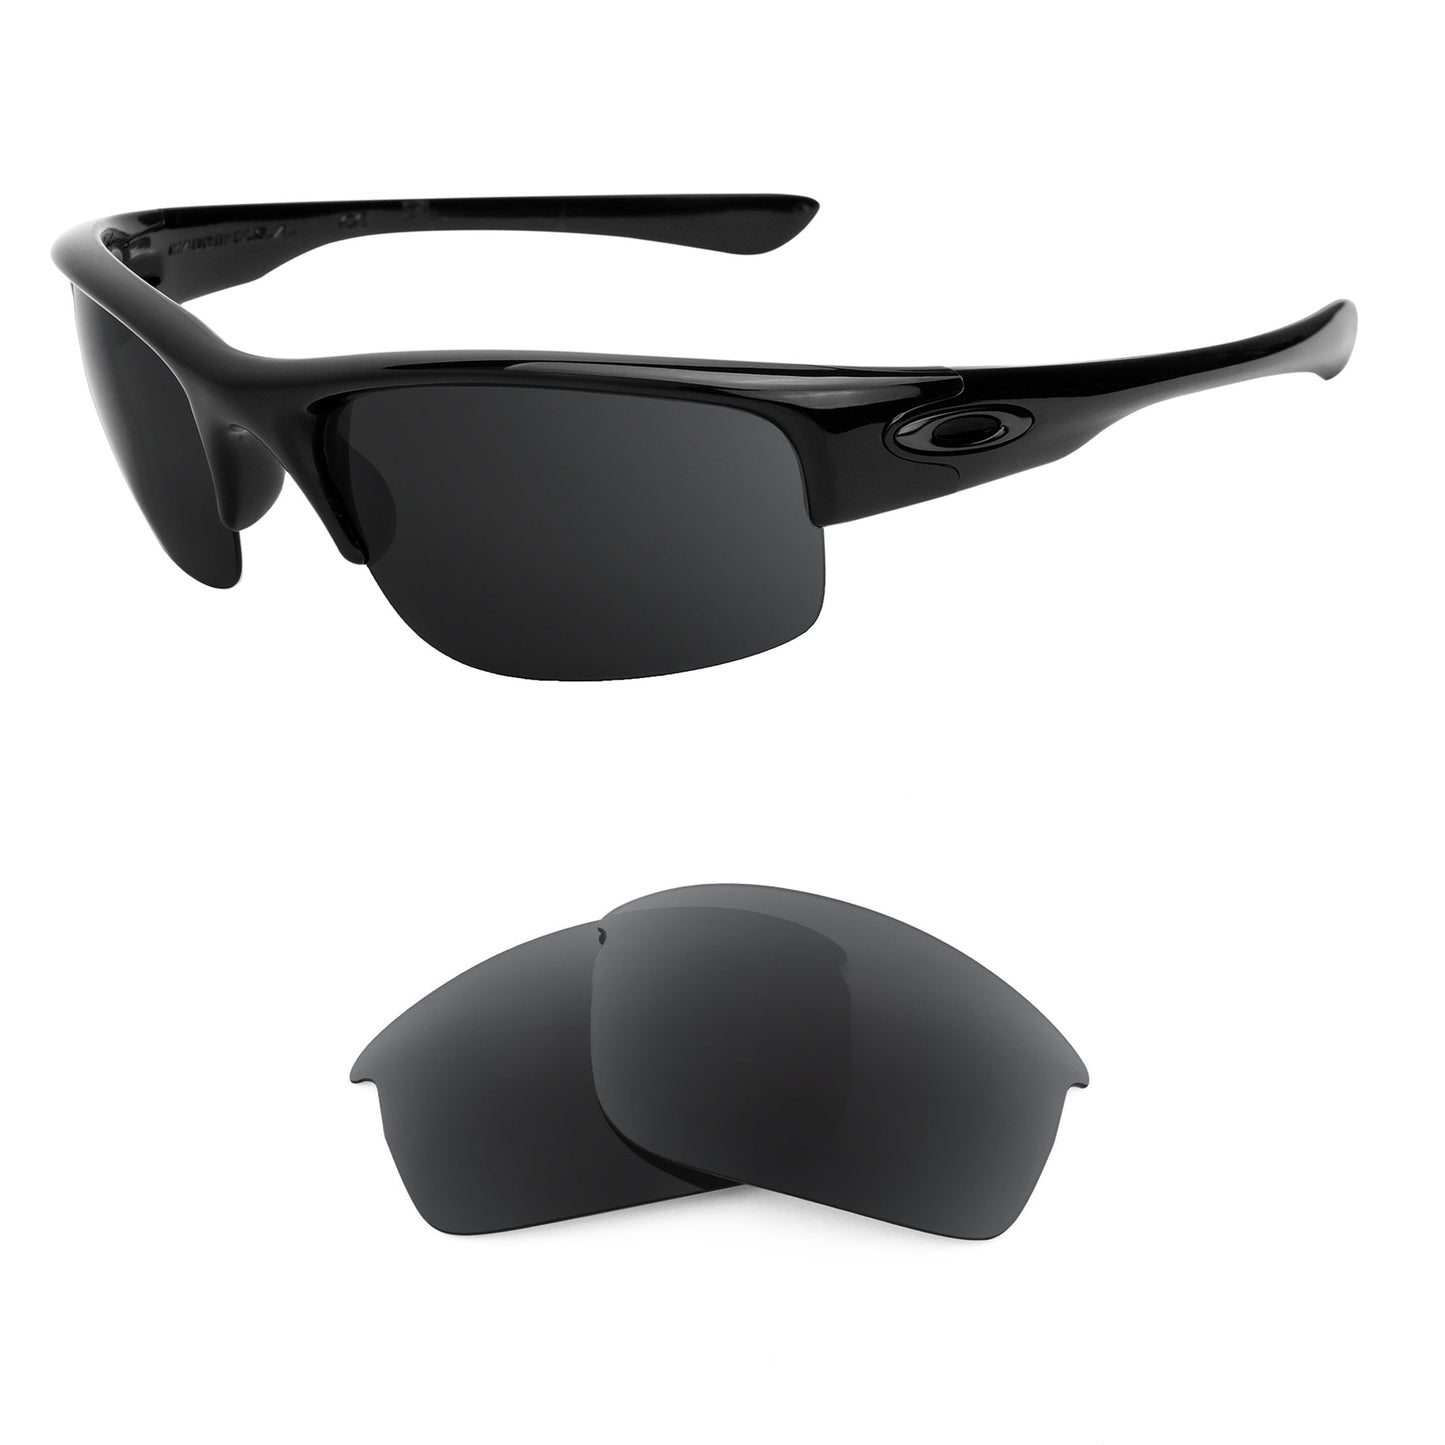 Oakley Bottlecap XL sunglasses with replacement lenses